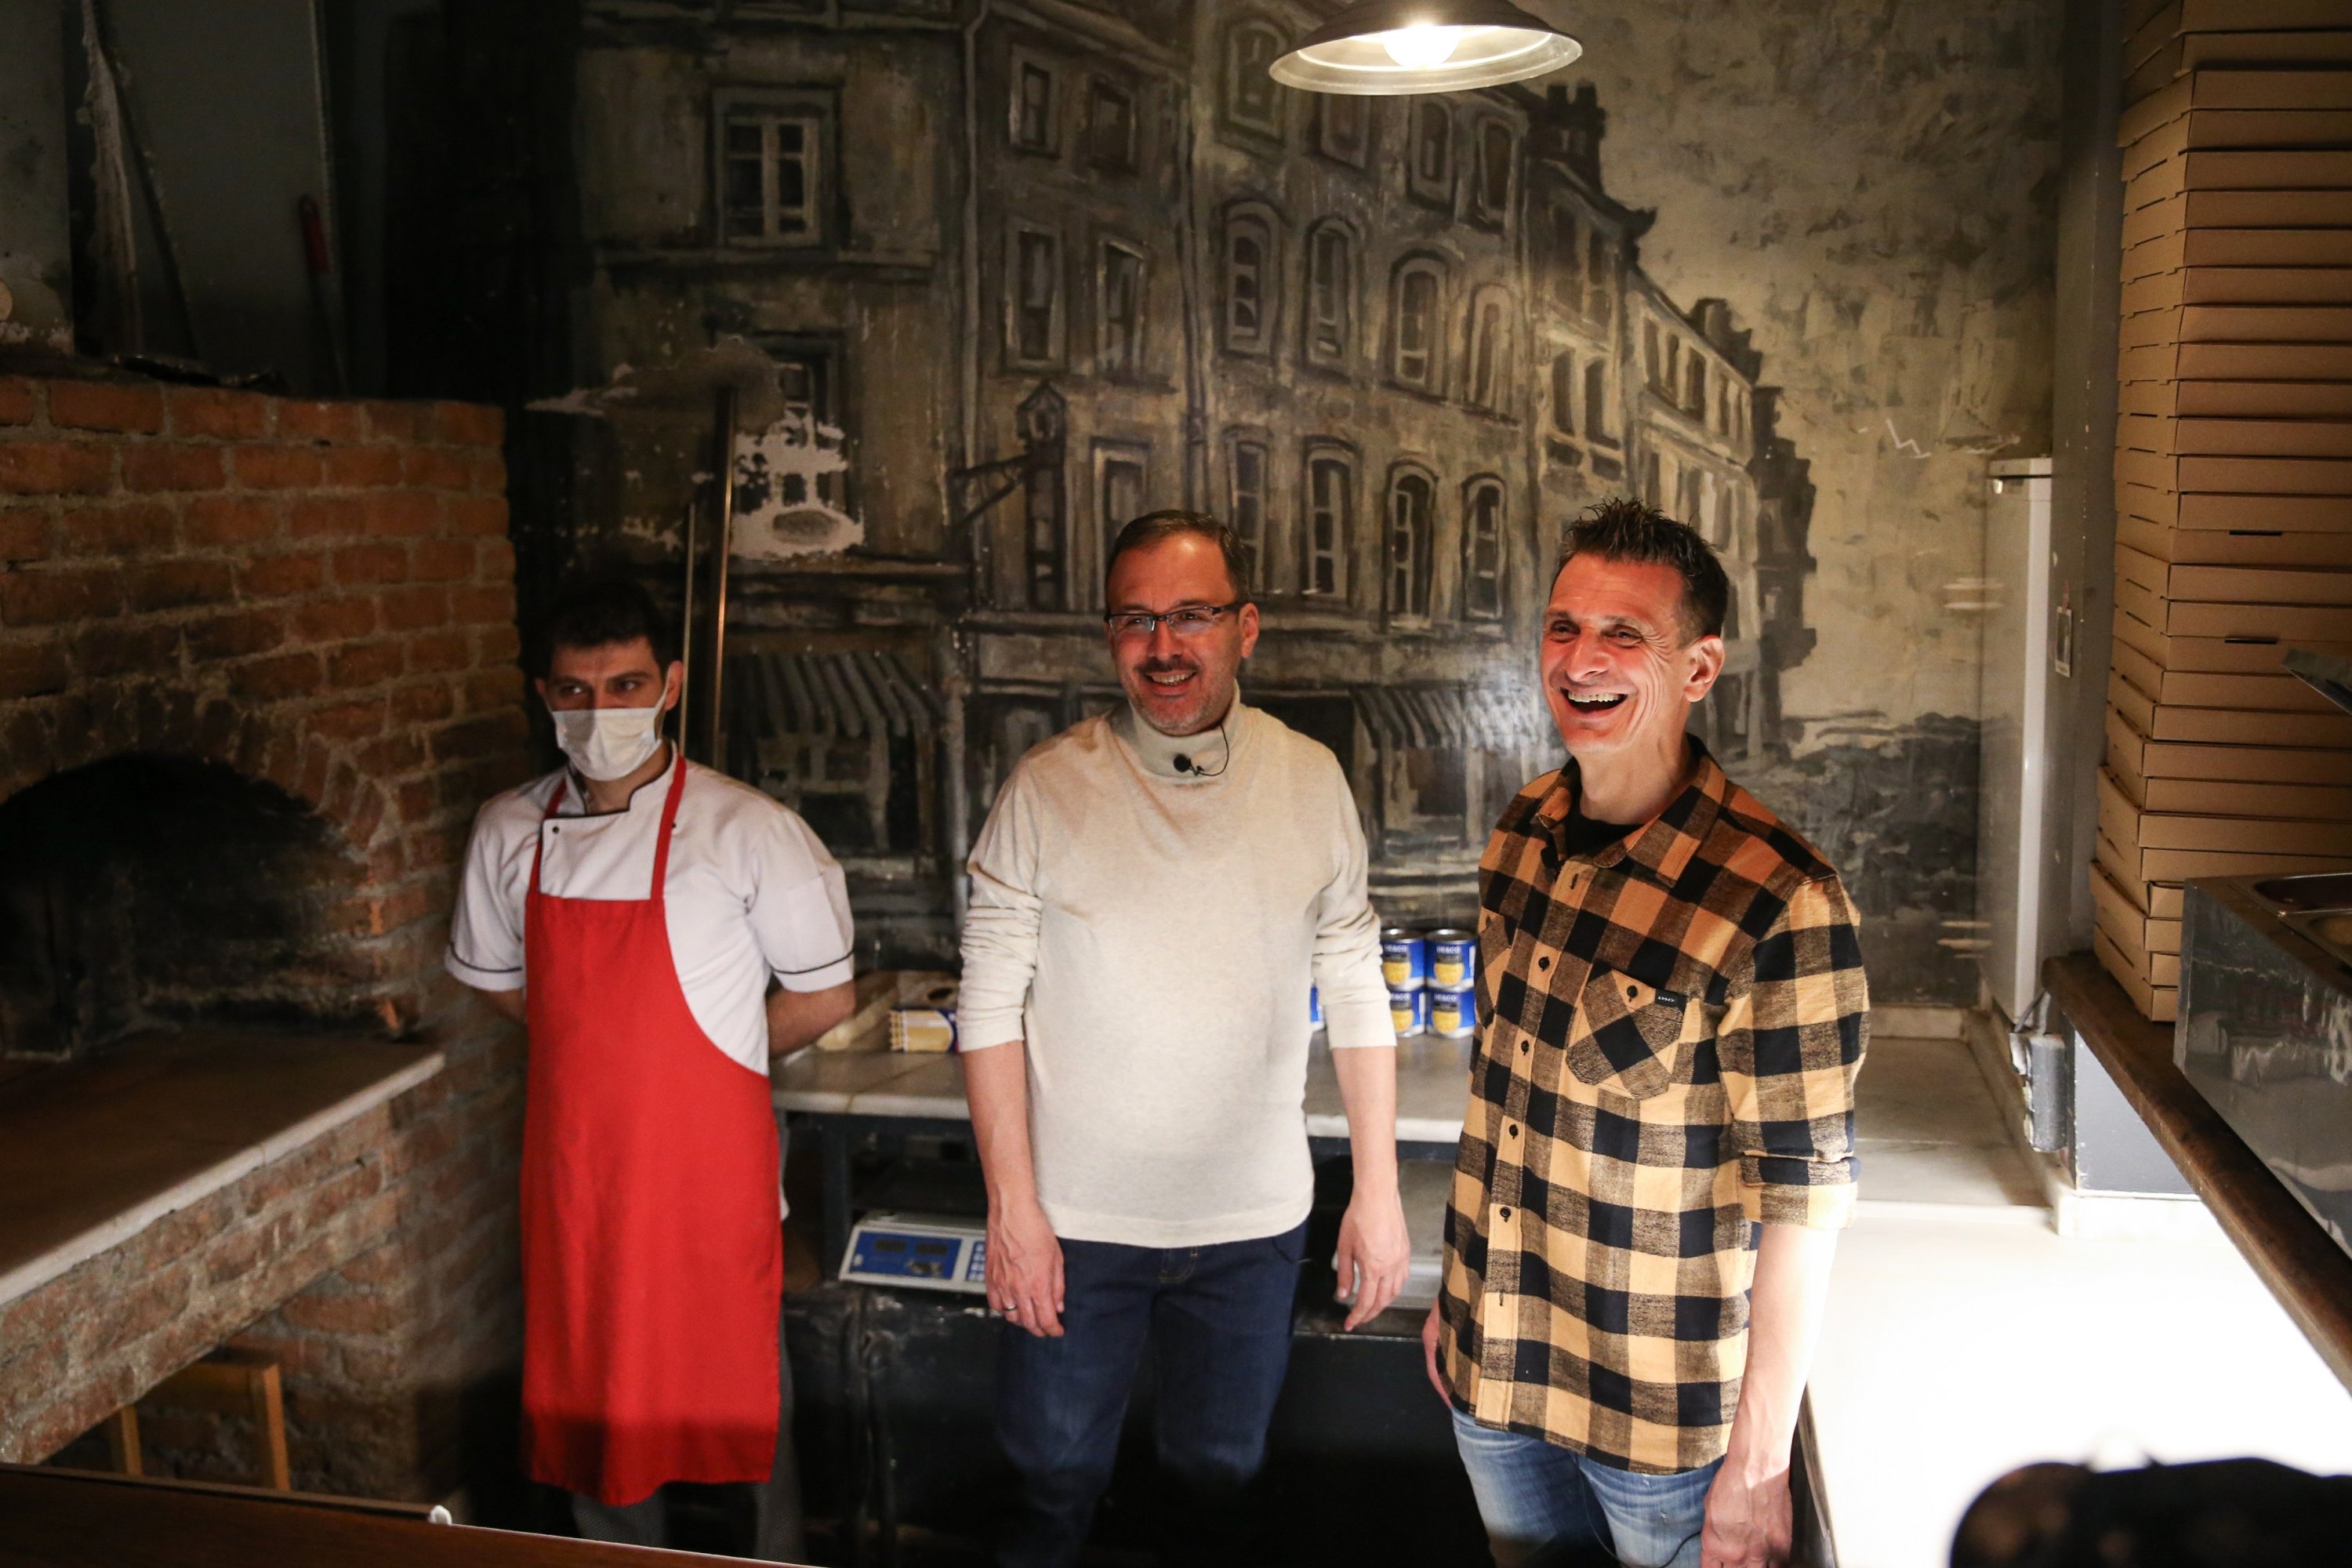 Menteri Muharrem Kasapoğlu (tengah) dan pelatih kepala Giovanni Guidetti berpose di dapur sebuah restoran Italia di Istanbul tempat keduanya membuat pizza bersama, Turki, 3 Januari 2022. (DHA Photo)